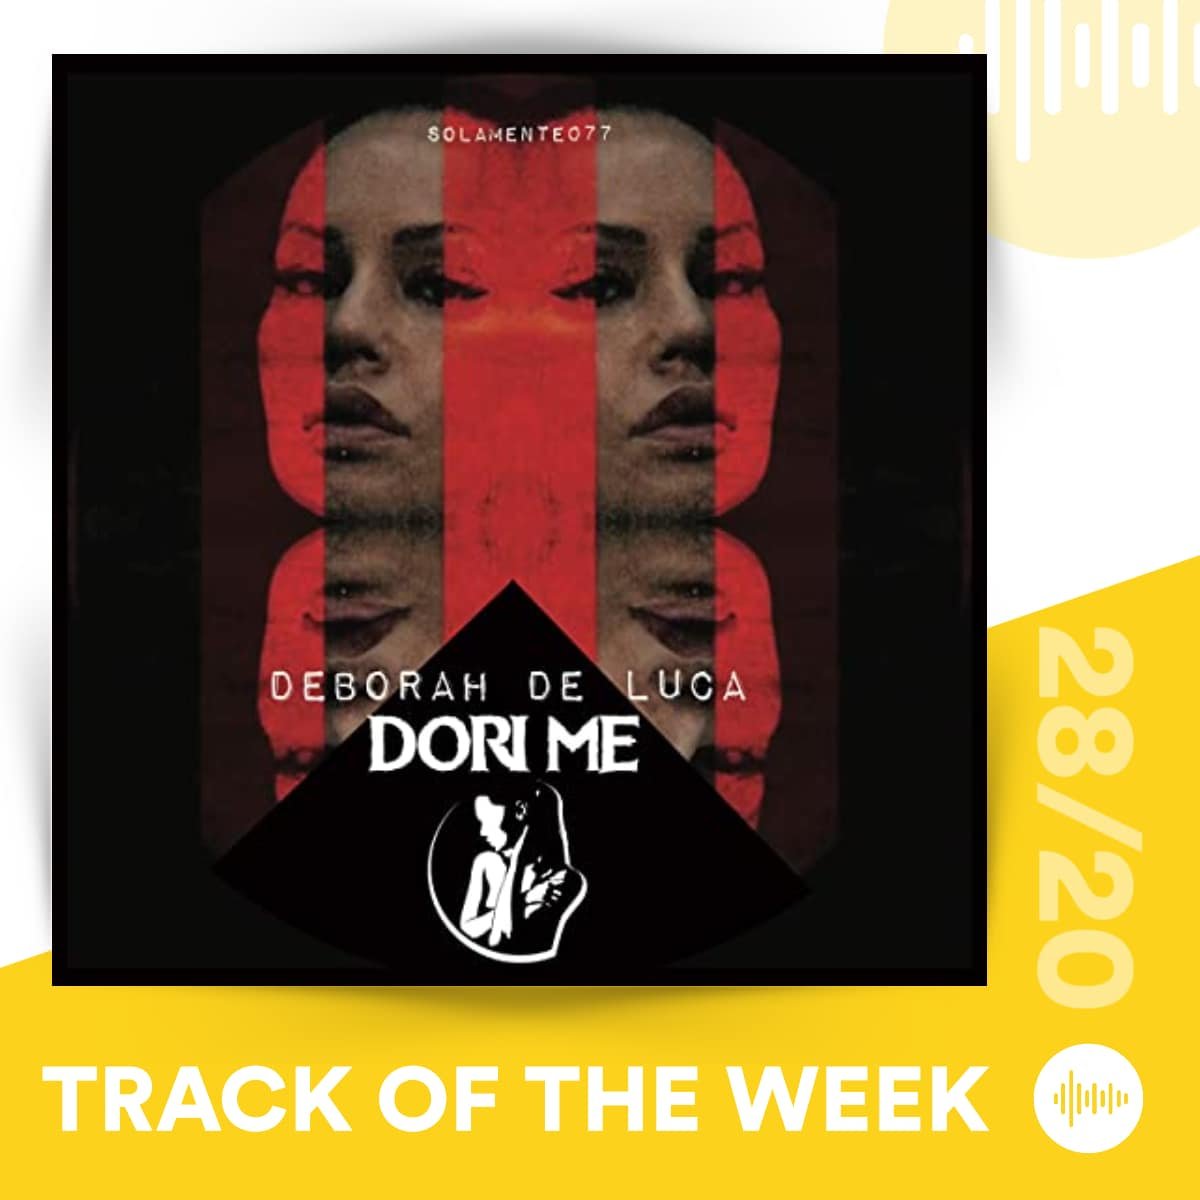 Deborah De Luca - Dori Me (Track of the Week 28/20)